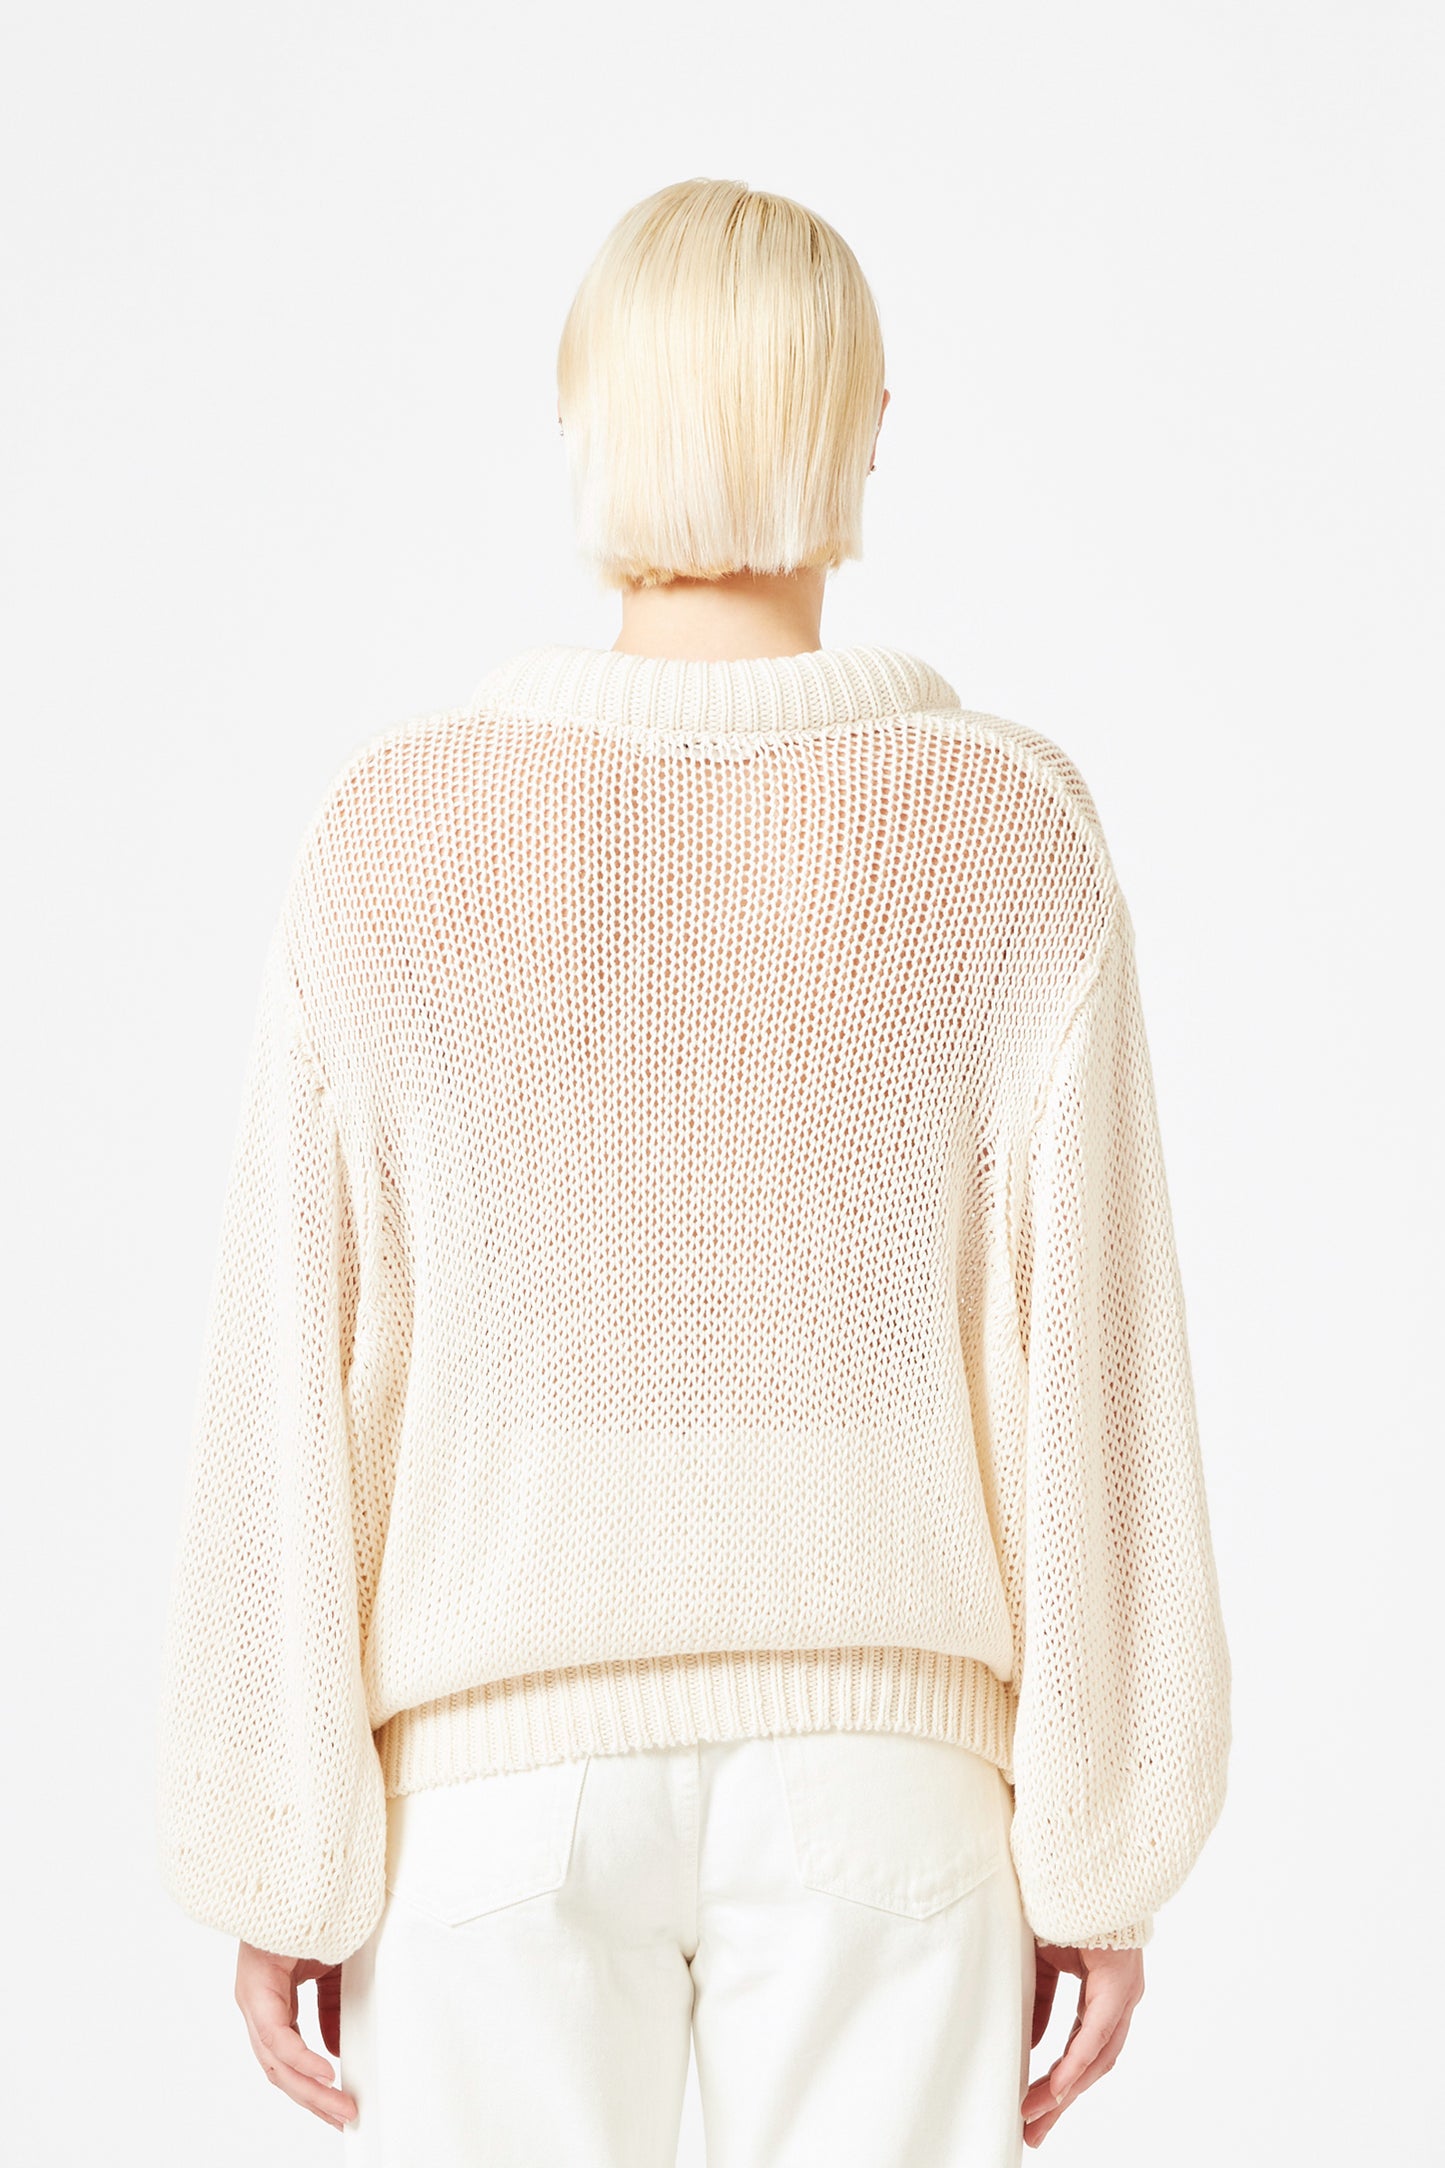 Bruno Sweater